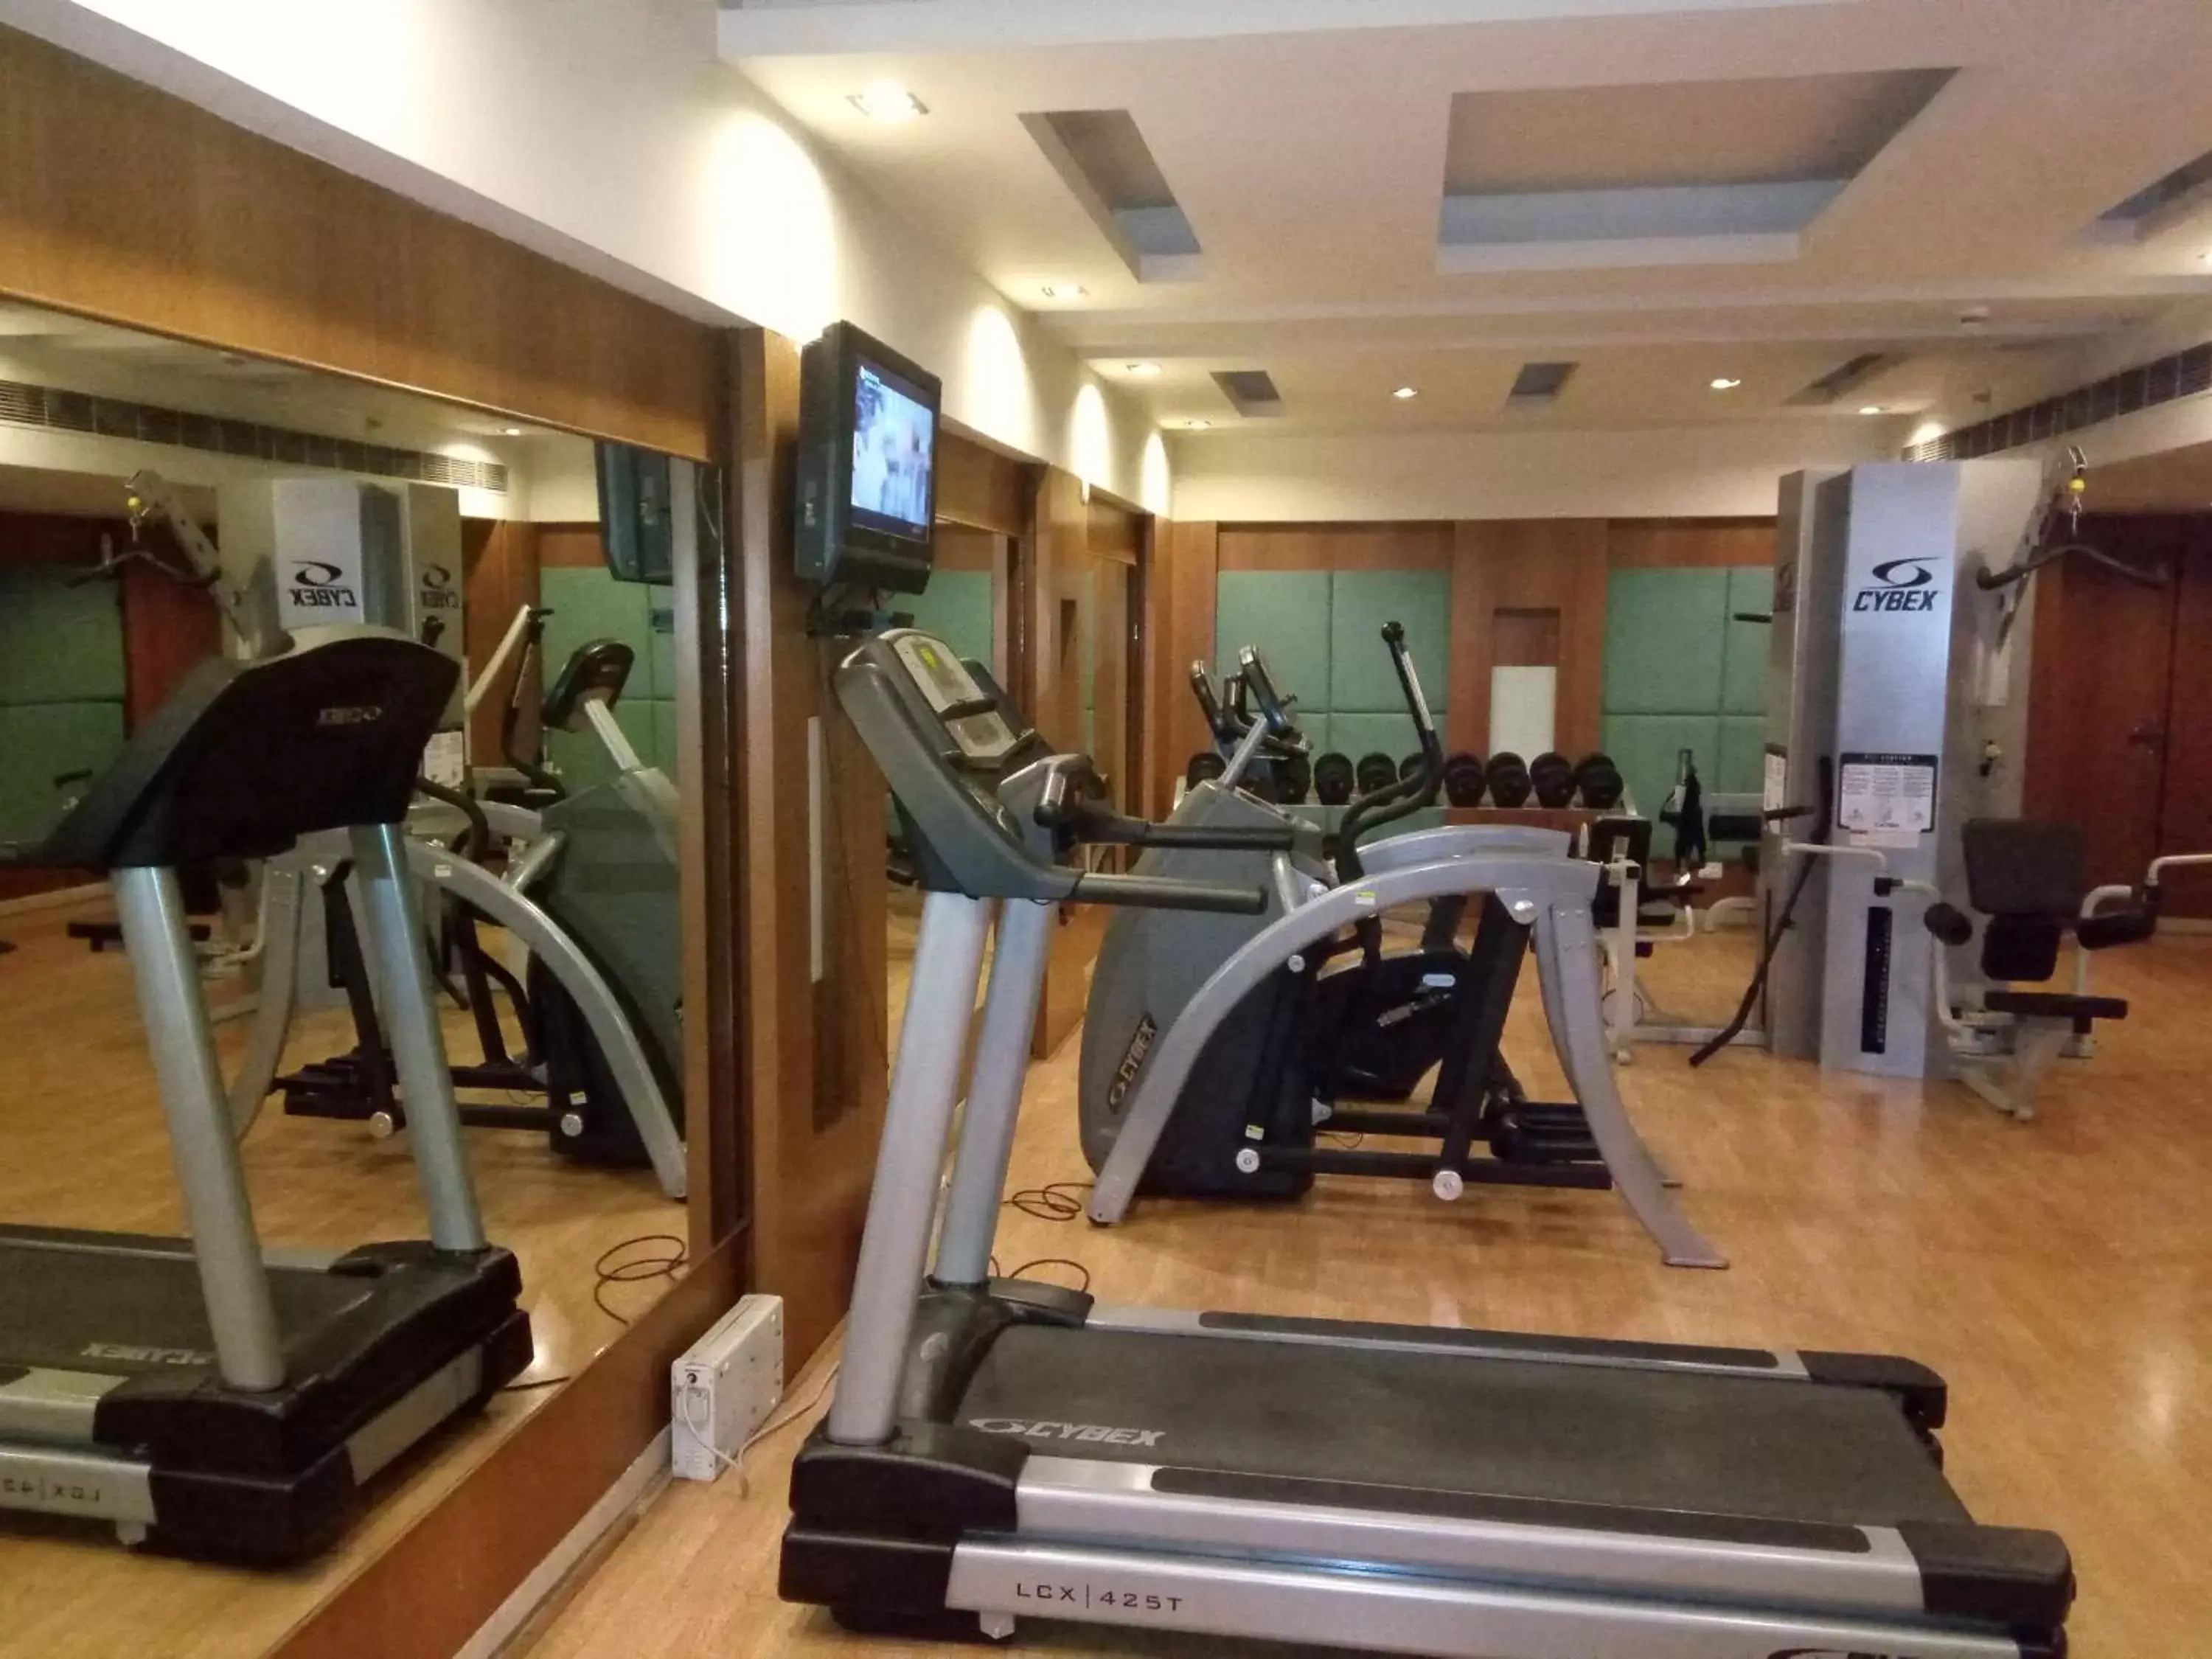 Fitness centre/facilities, Fitness Center/Facilities in Hampshire Plaza